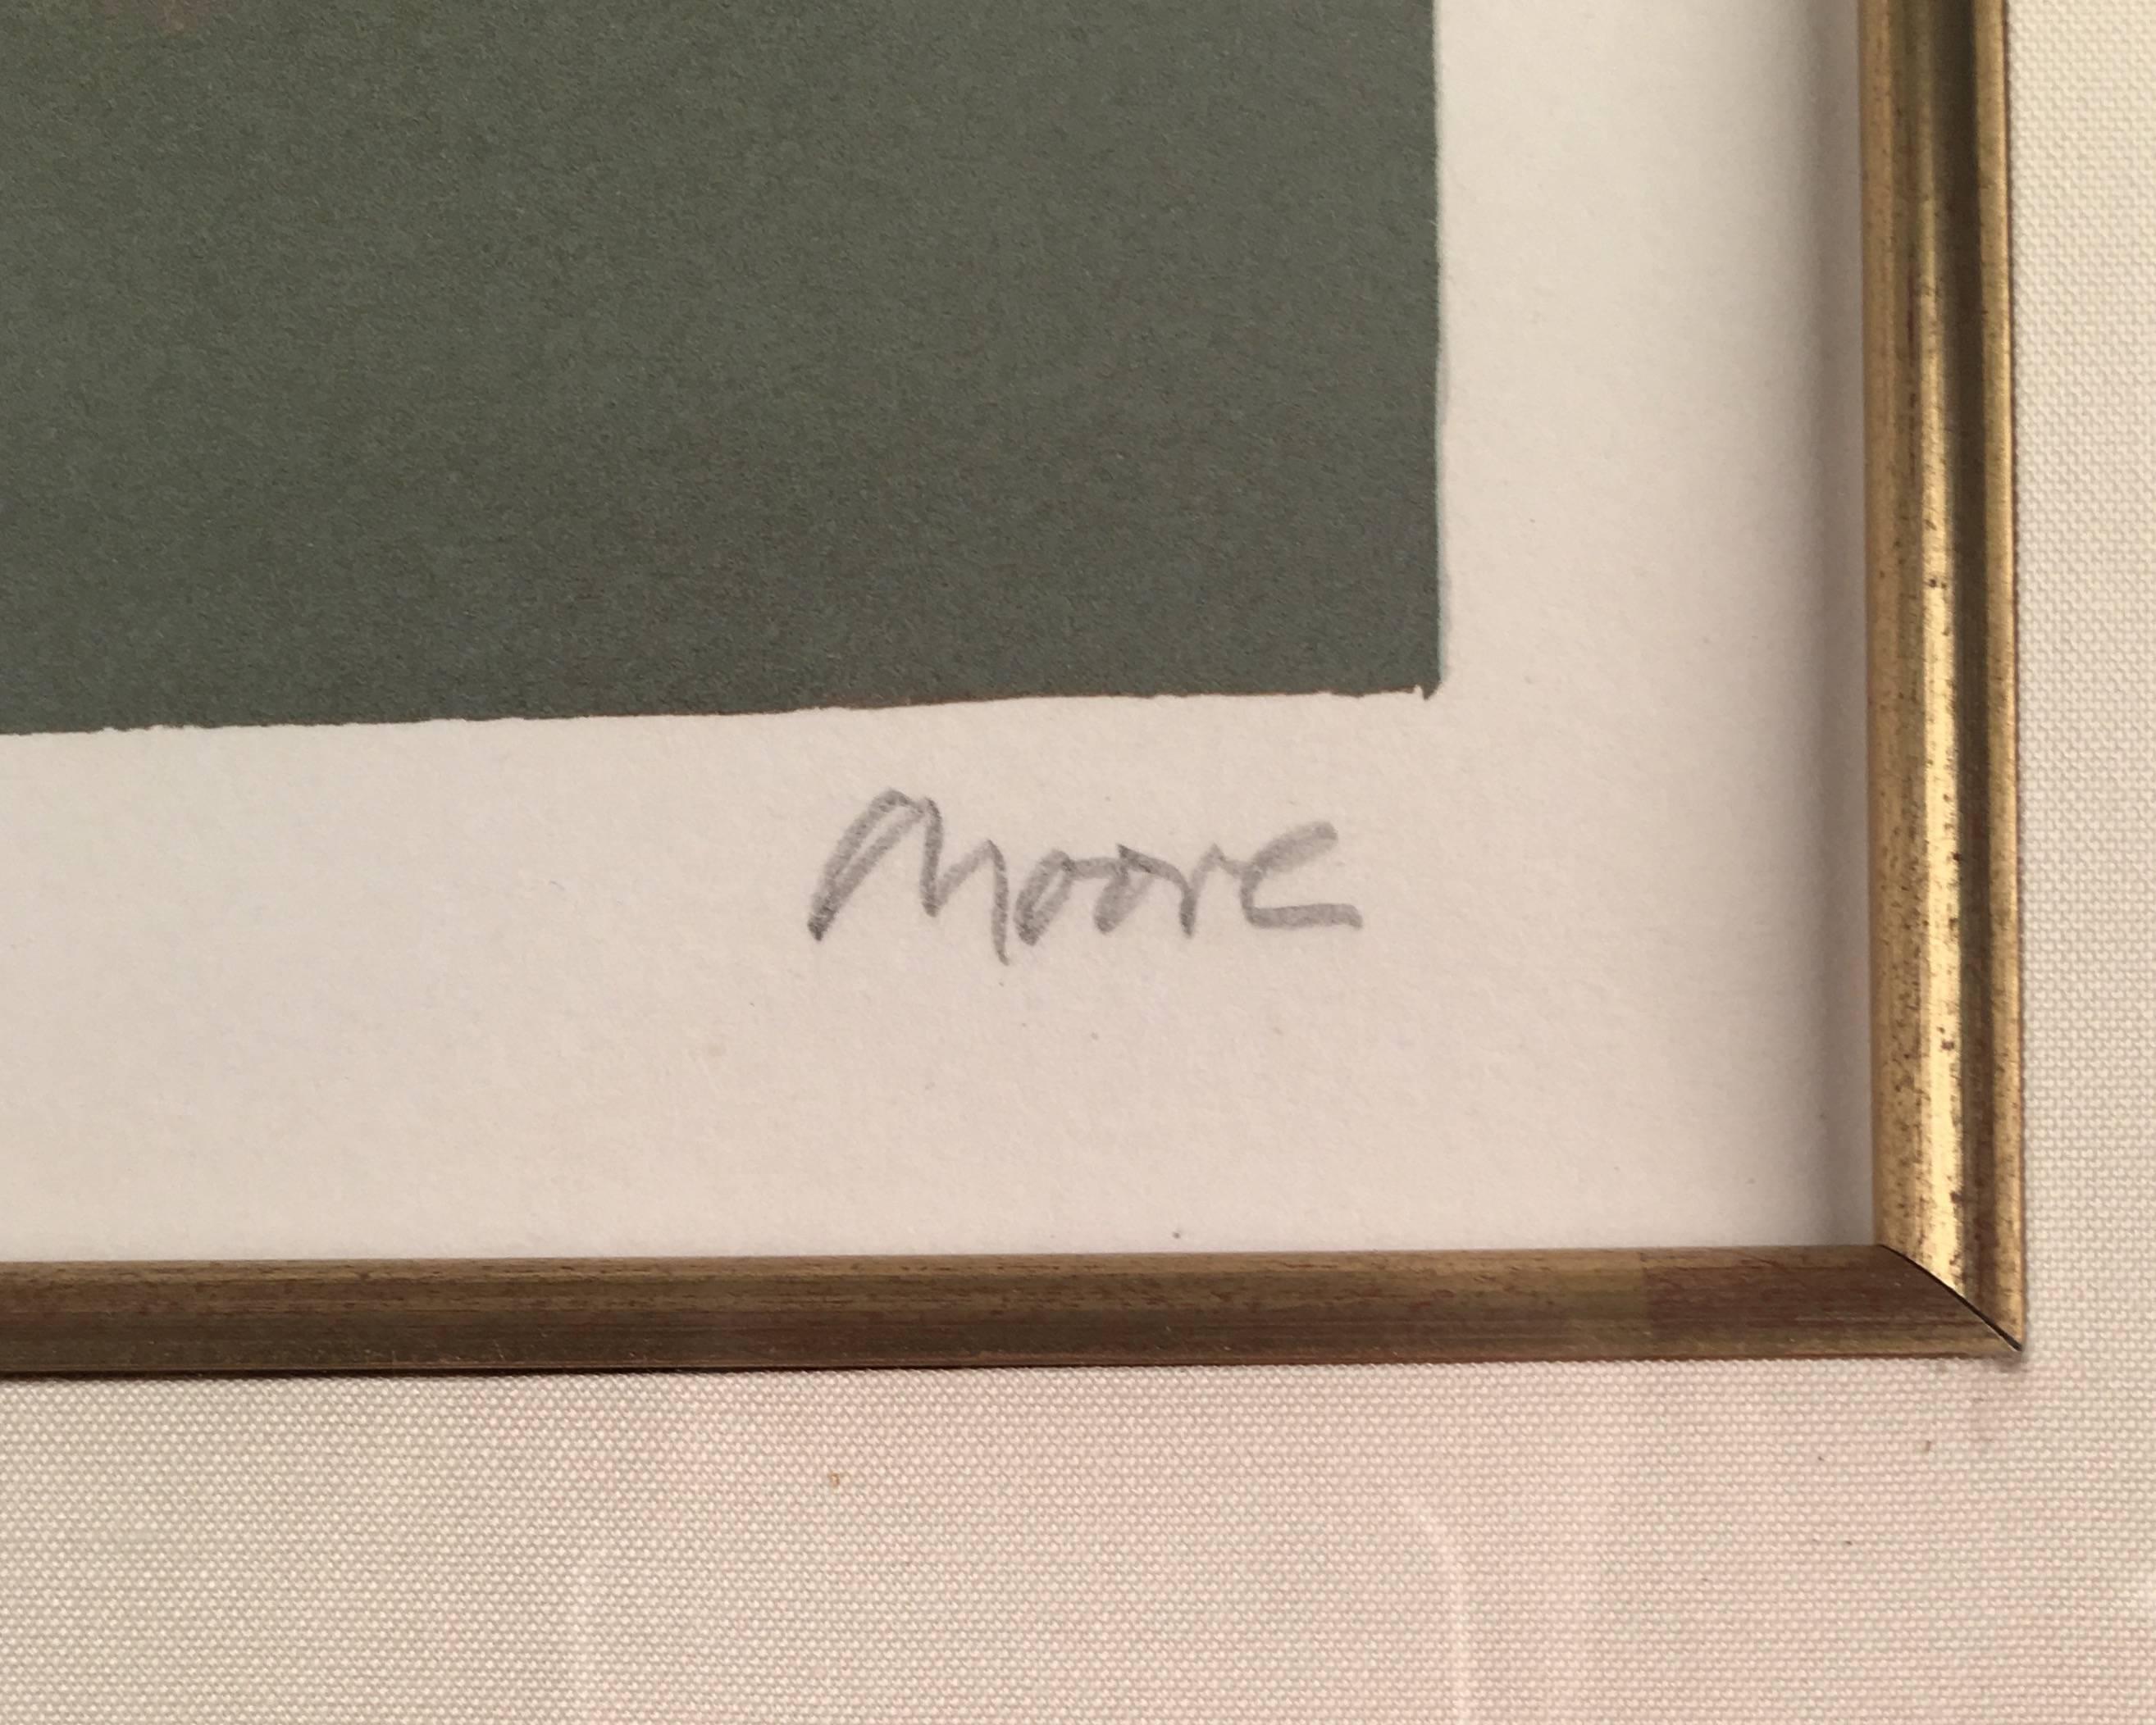 Henry Moore, 